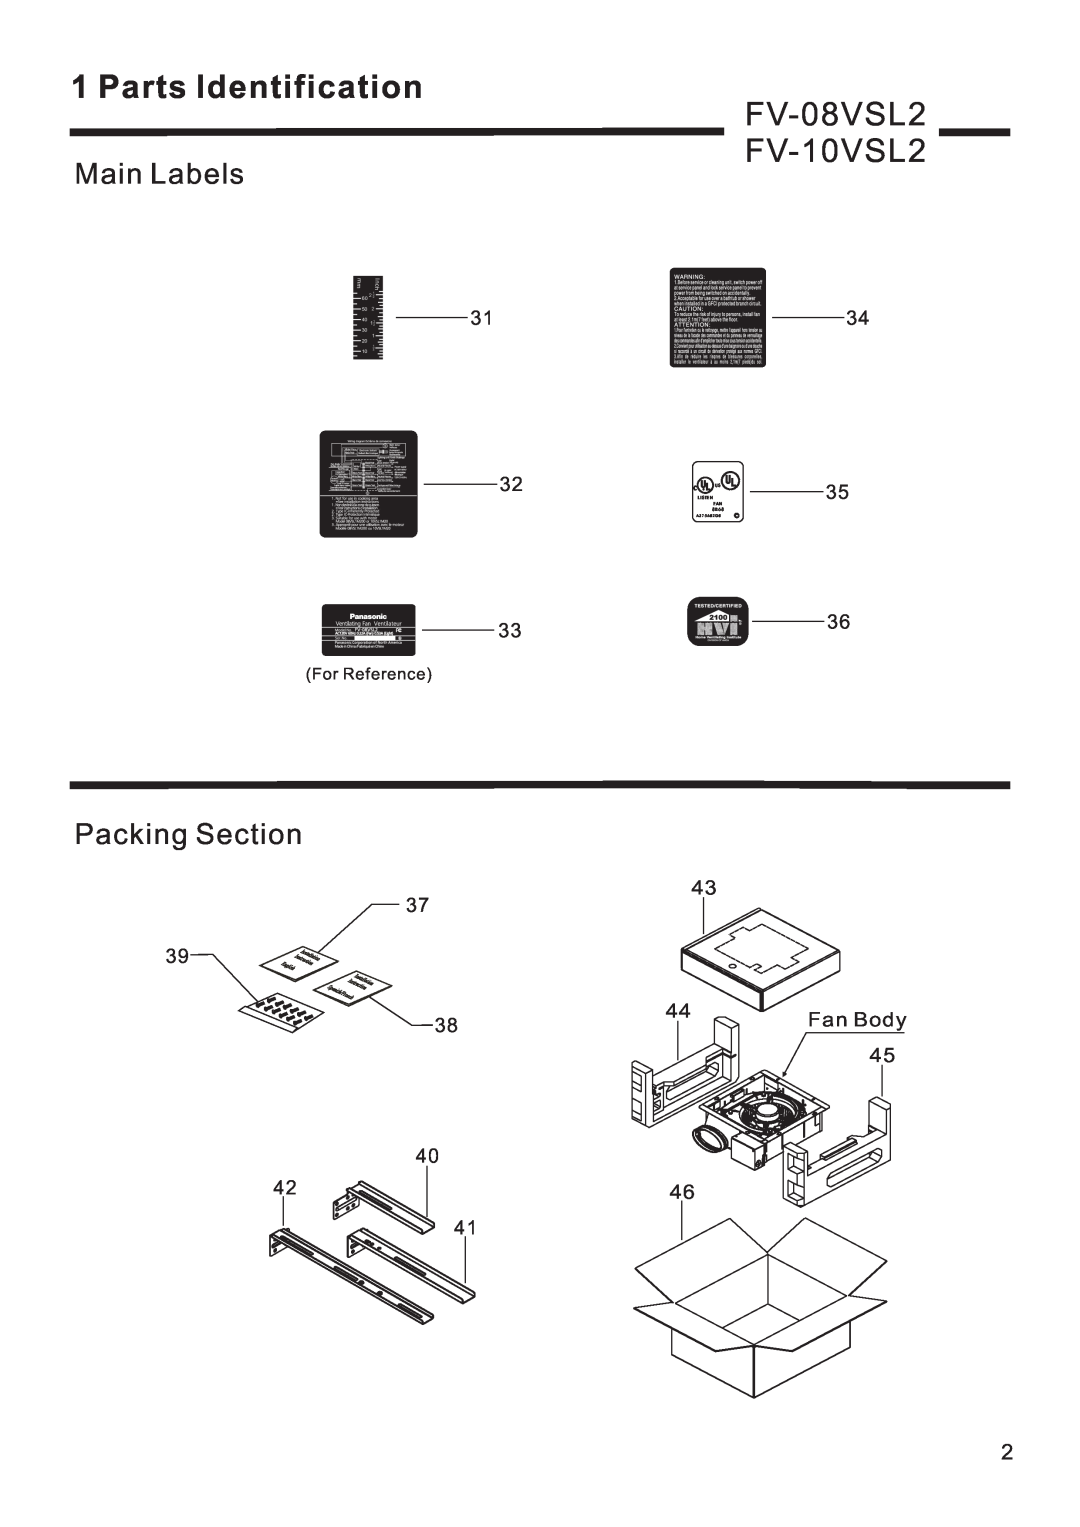 Panasonic FV-08VSL2 FV-10VSL2, Main Labels, Packing Section, Parts Identification, Fan Body, For Reference, Inch 